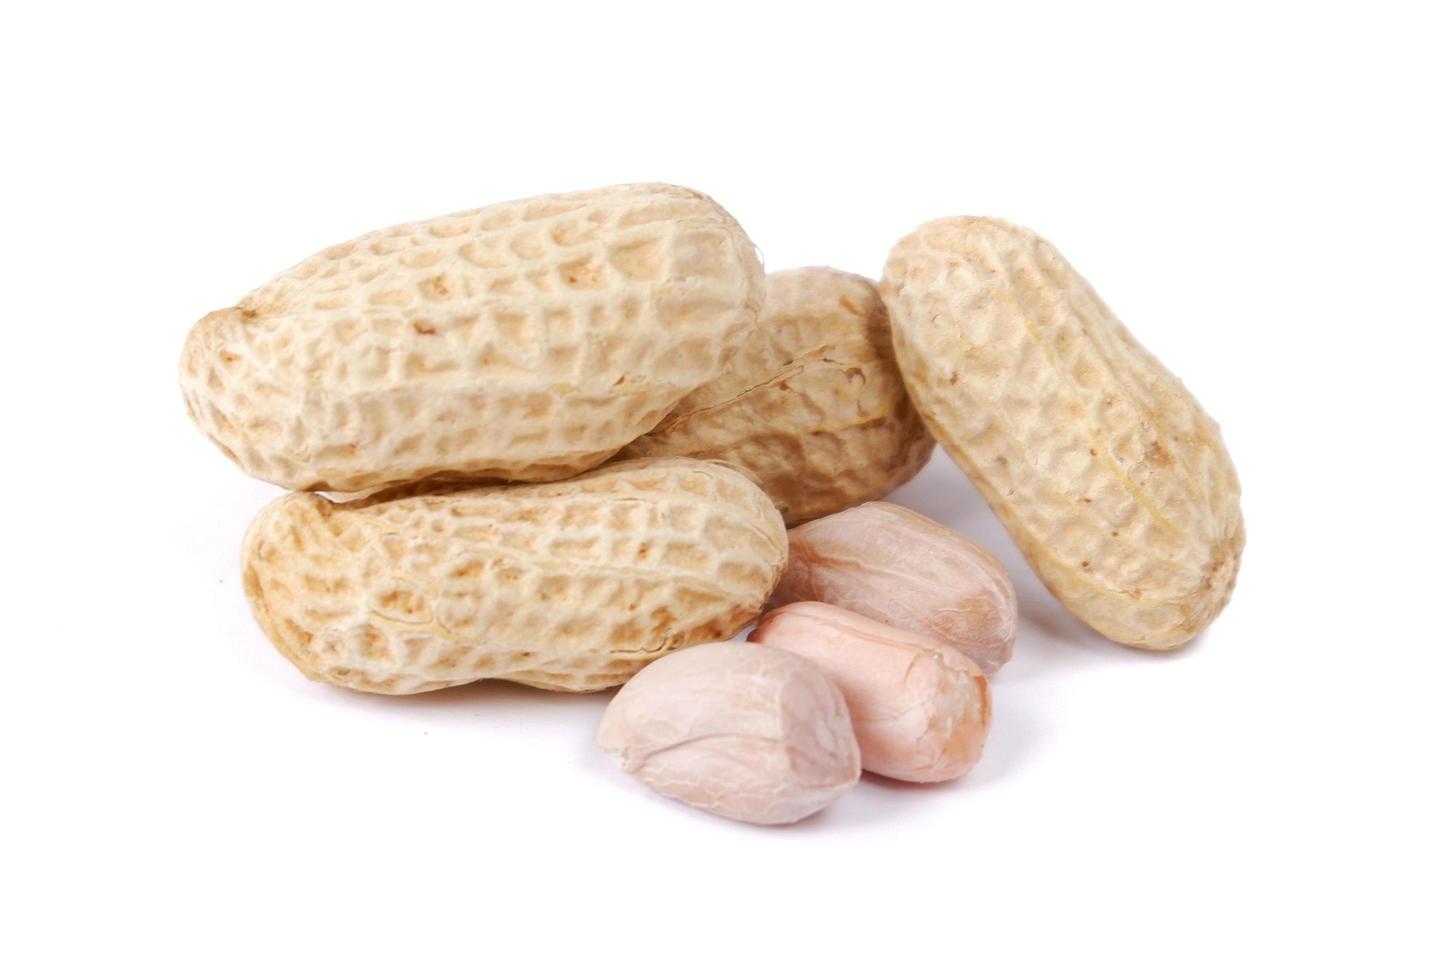 Peanut shell isolated on white photo